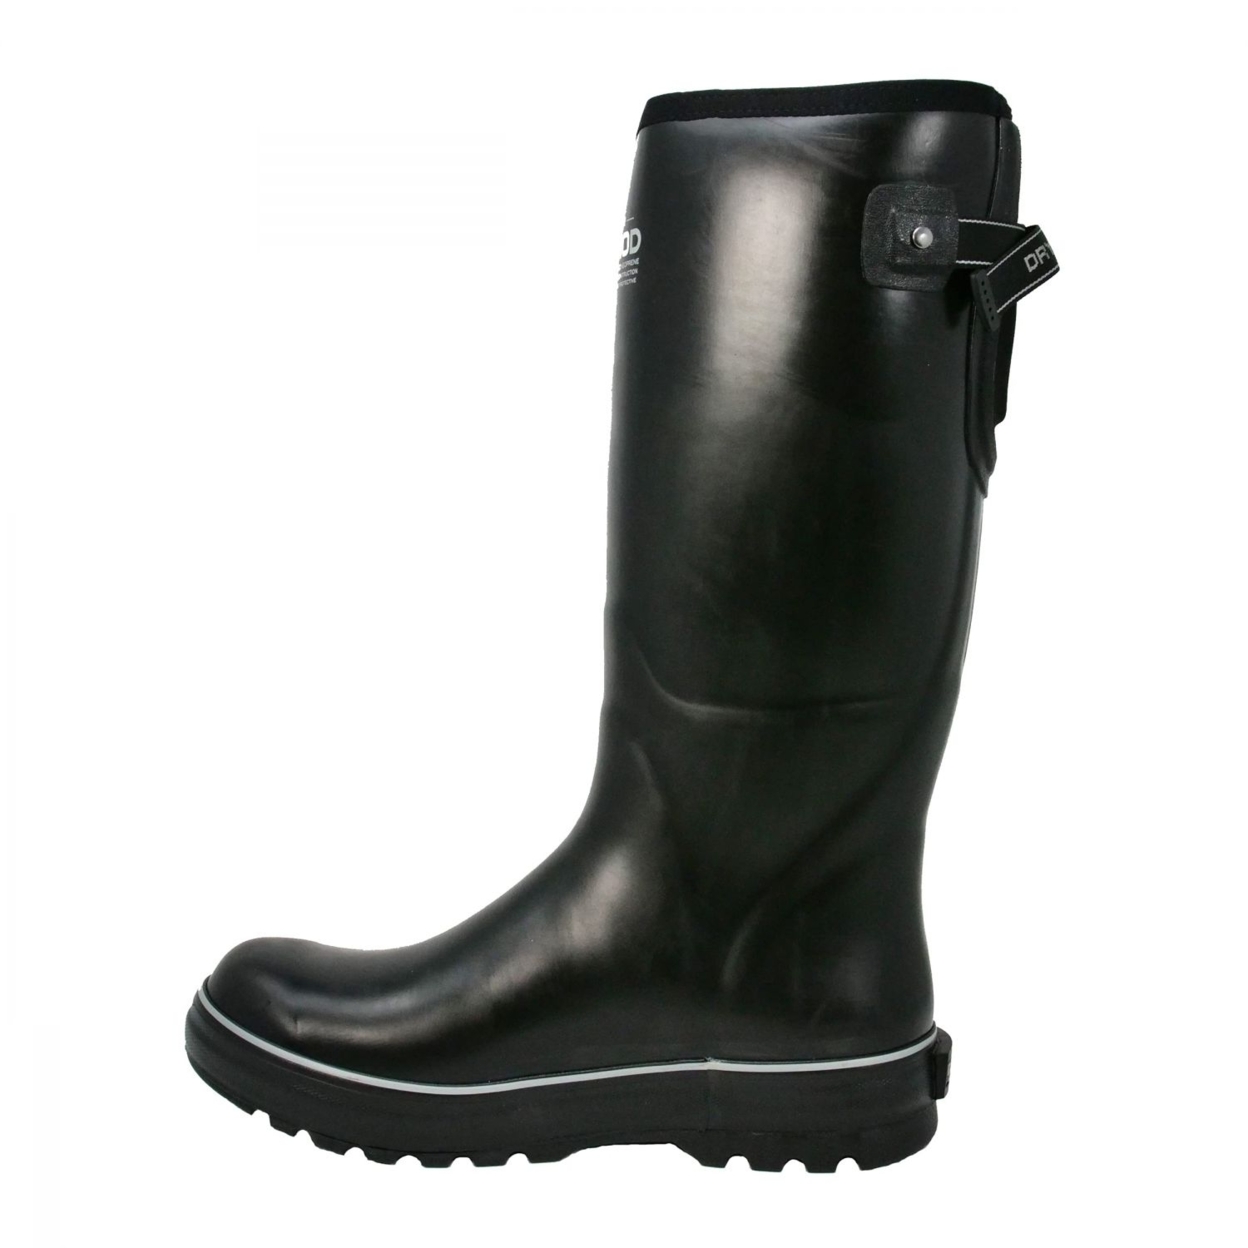 Dryshod Men's Mudslinger Gusset Premium Rubber Farm Boots Black/Grey - MDG-MH-BK ONE SIZE BLACK/GREY - BLACK/GREY, 12